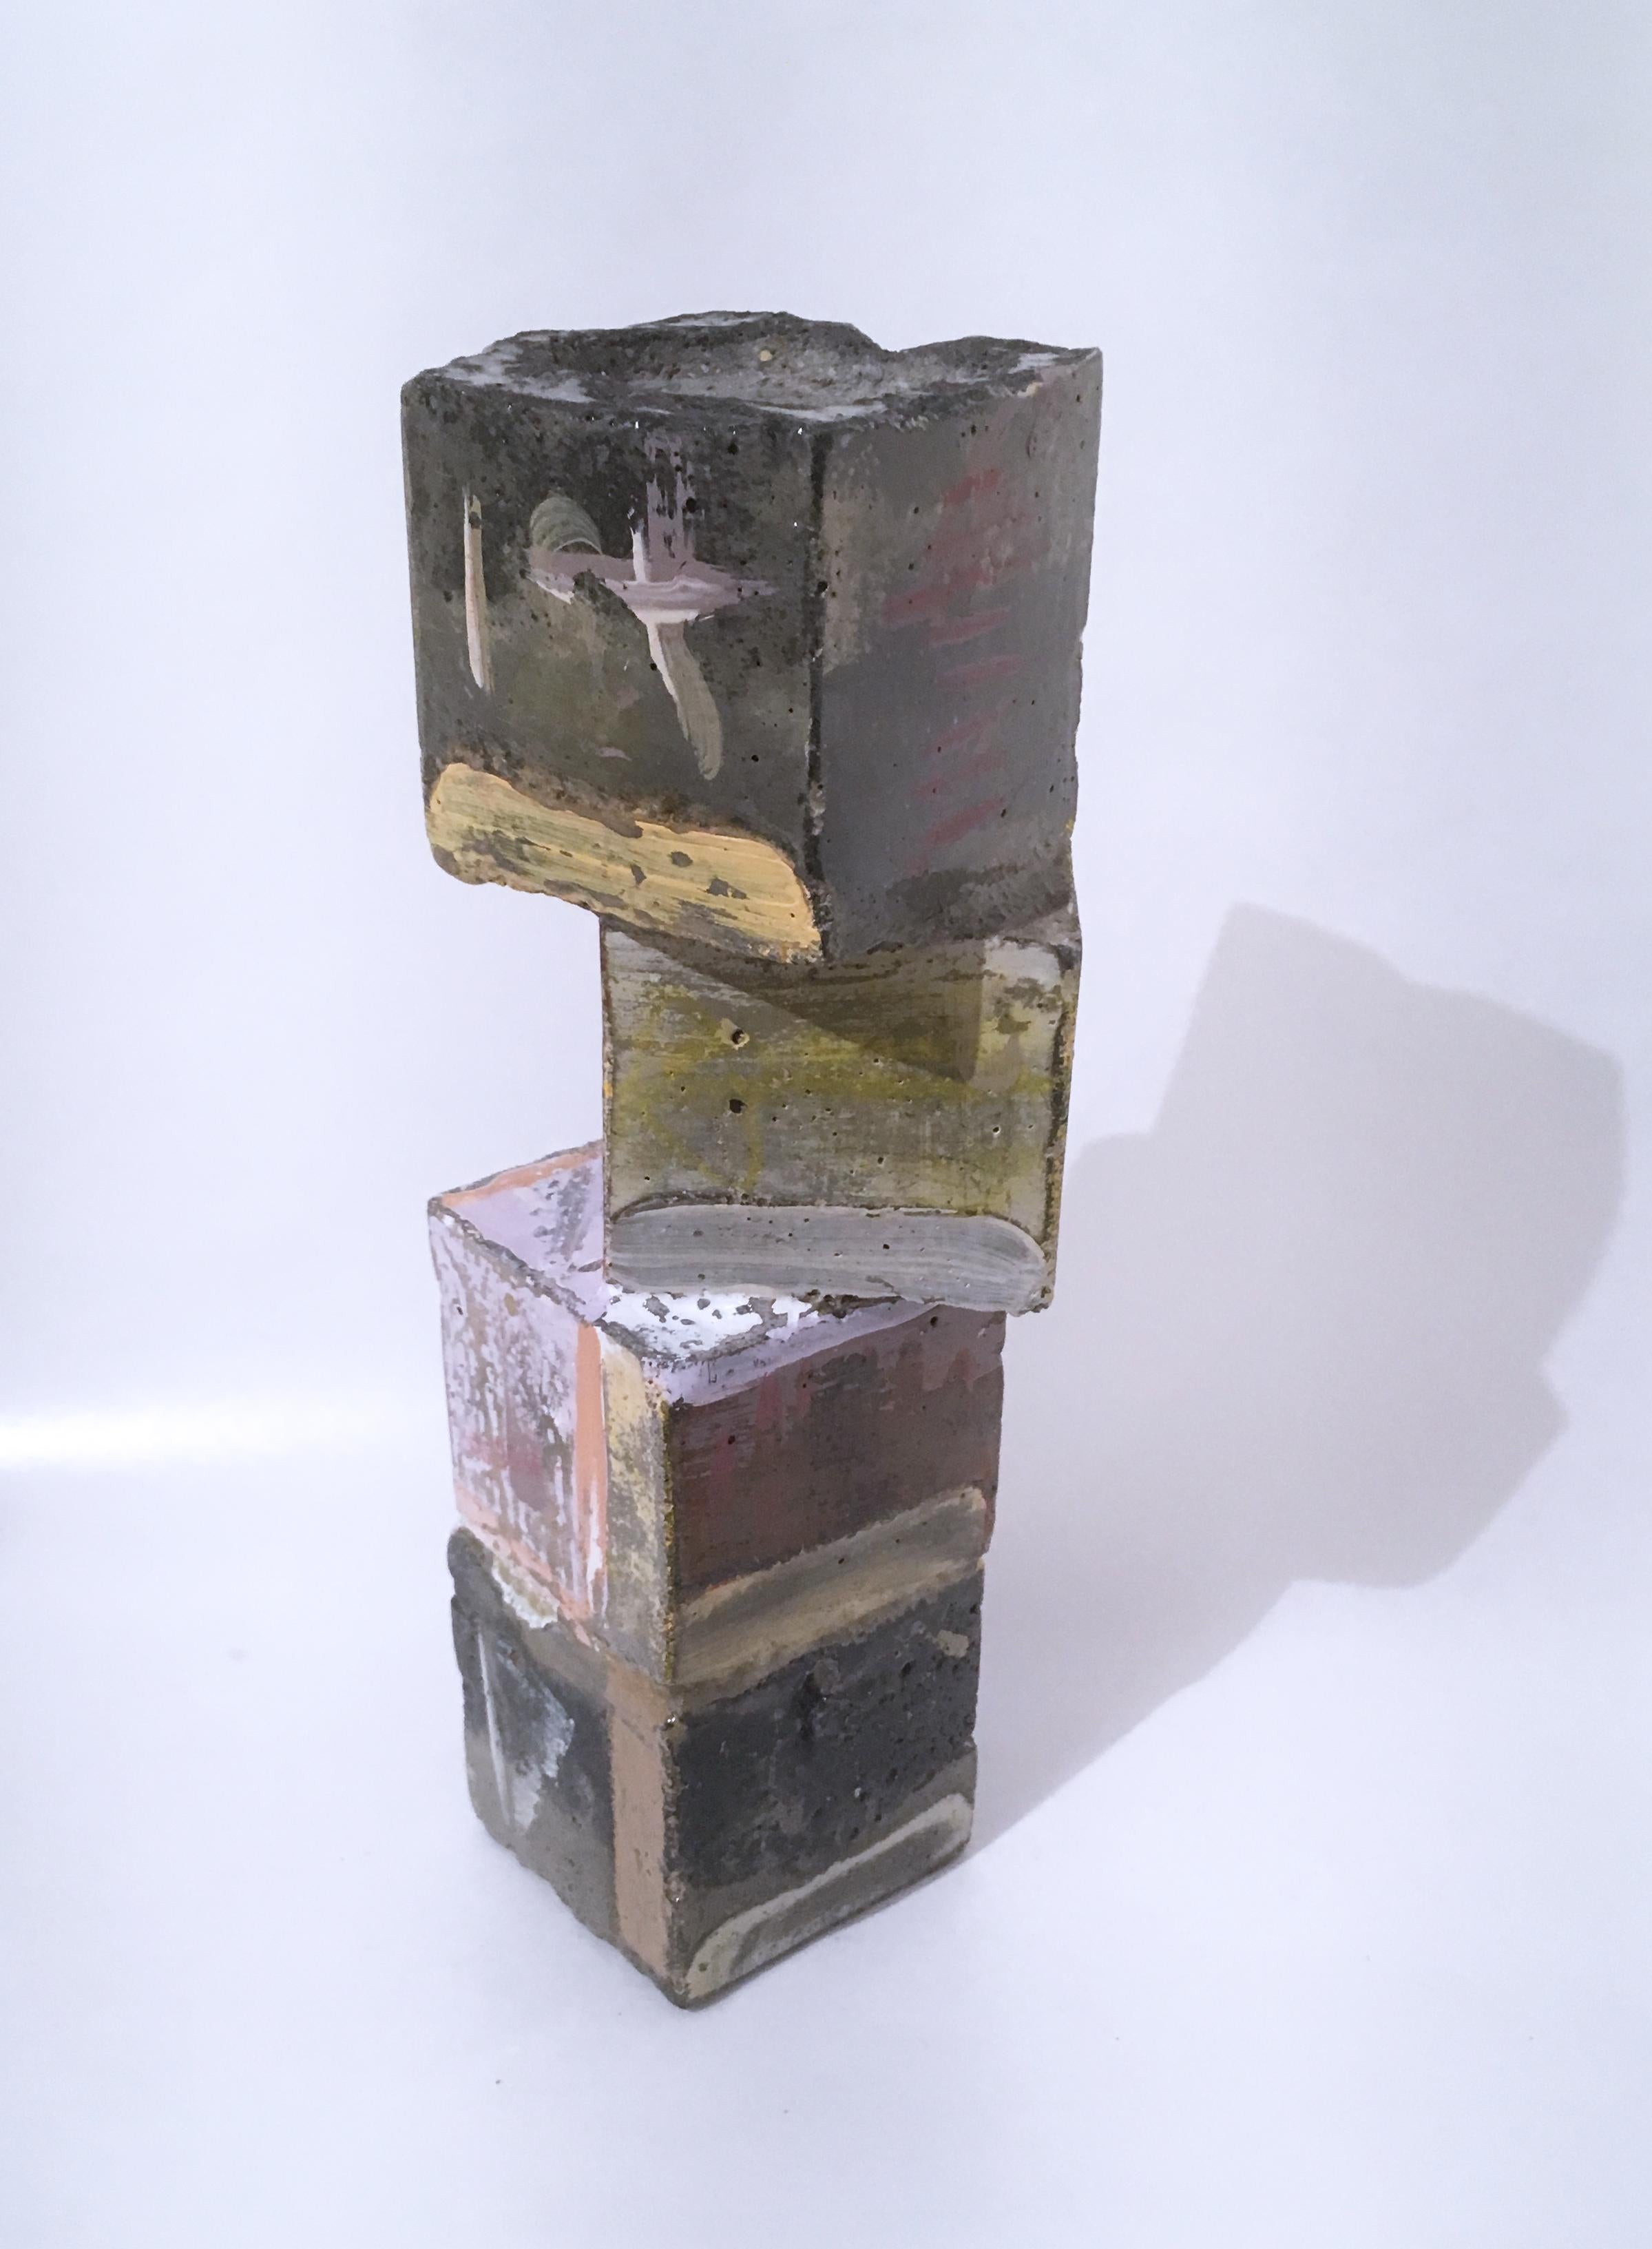 Votive Skulptur mit gestapeltem Würfel ( Mehrfarbige Skulptur), 2020